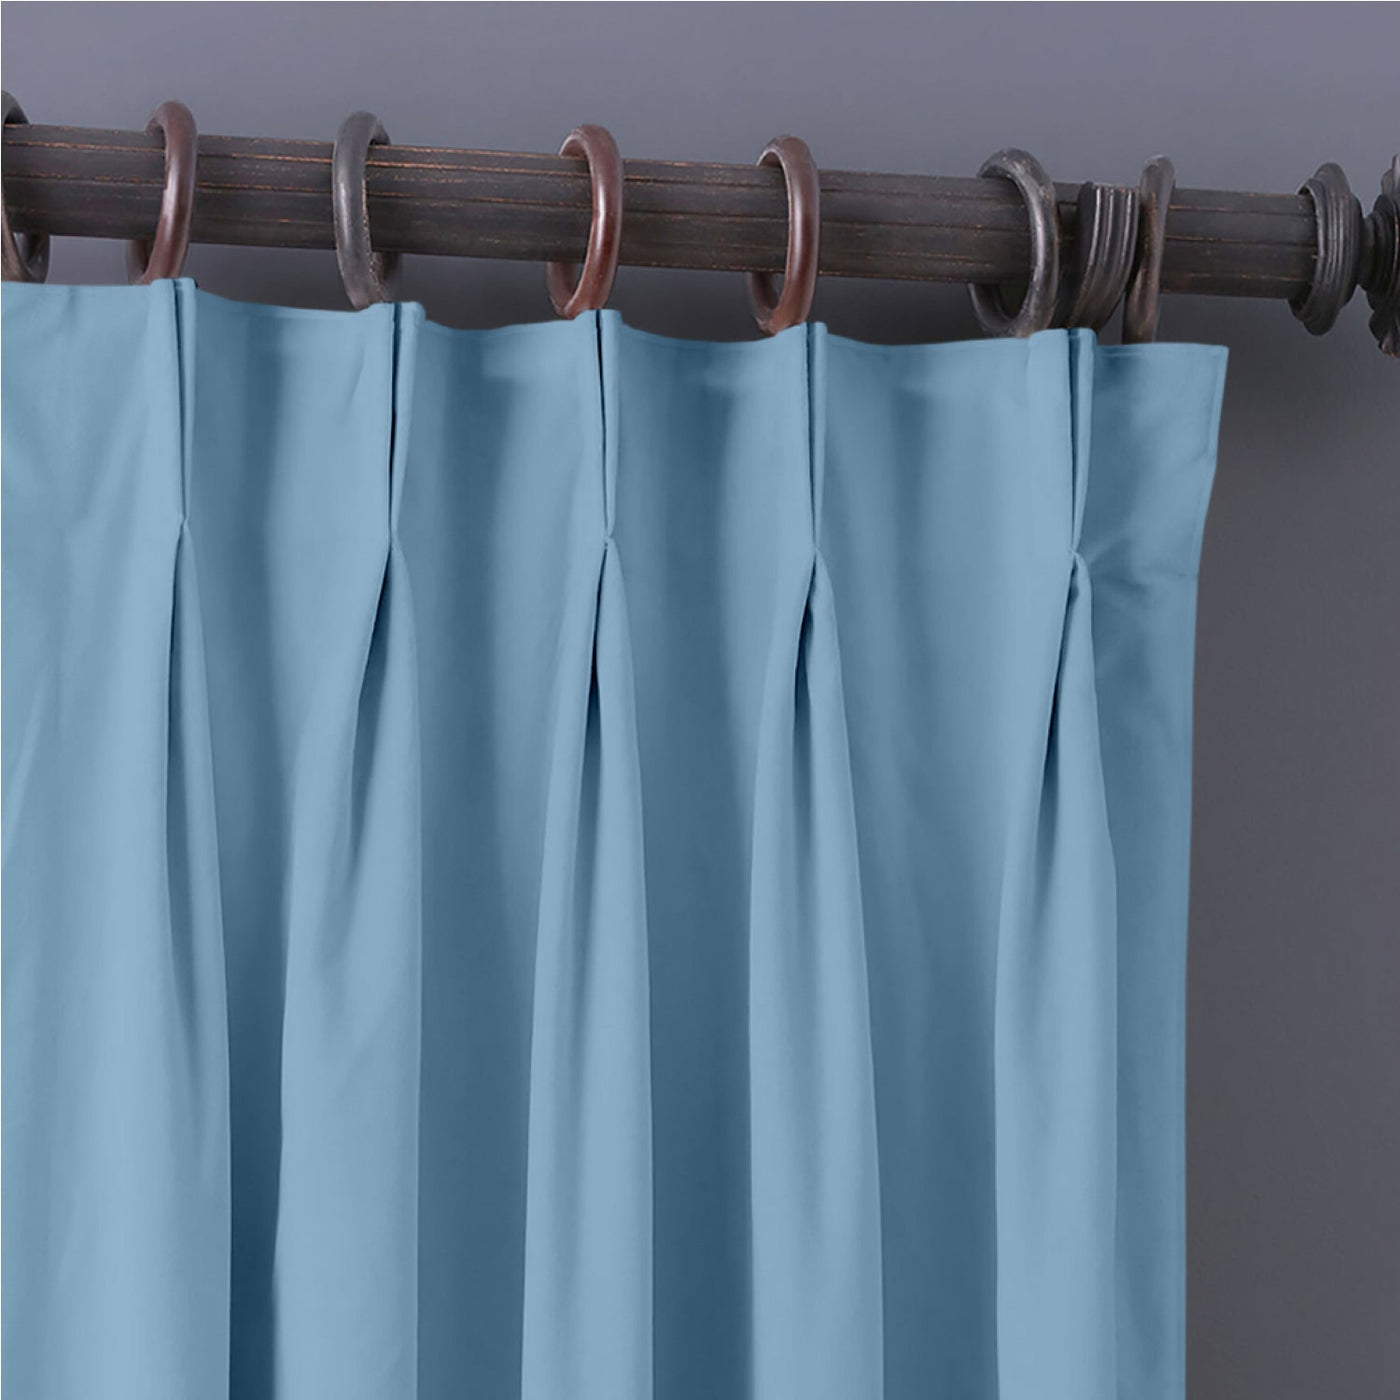 Double Pinch Pleat Semi-Blackout Curtain 1 Piece - Sky Blue